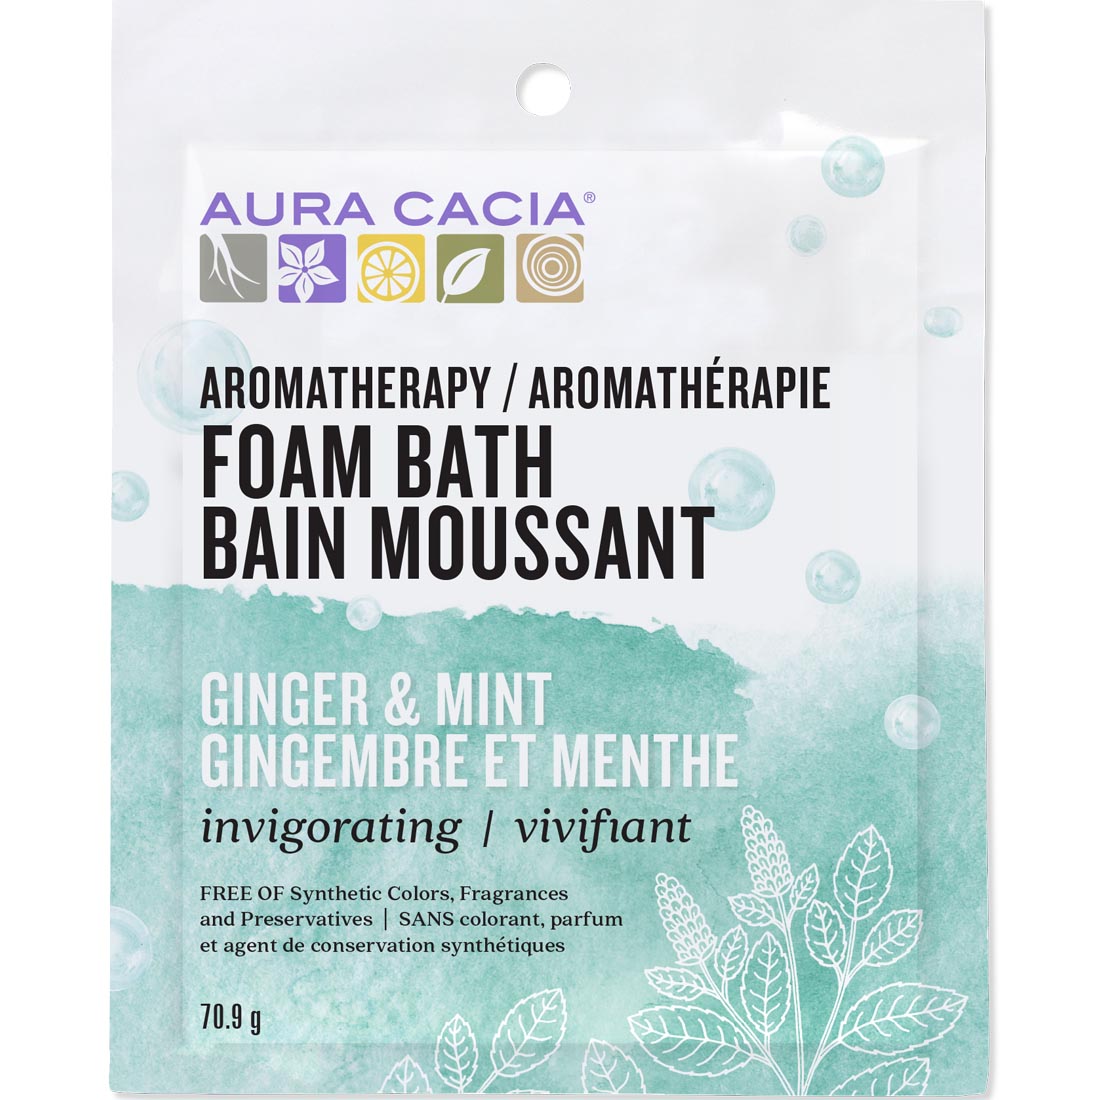 Aura Cacia Ginger Mint Foam Bath, 6 Packs, 6 x 71g